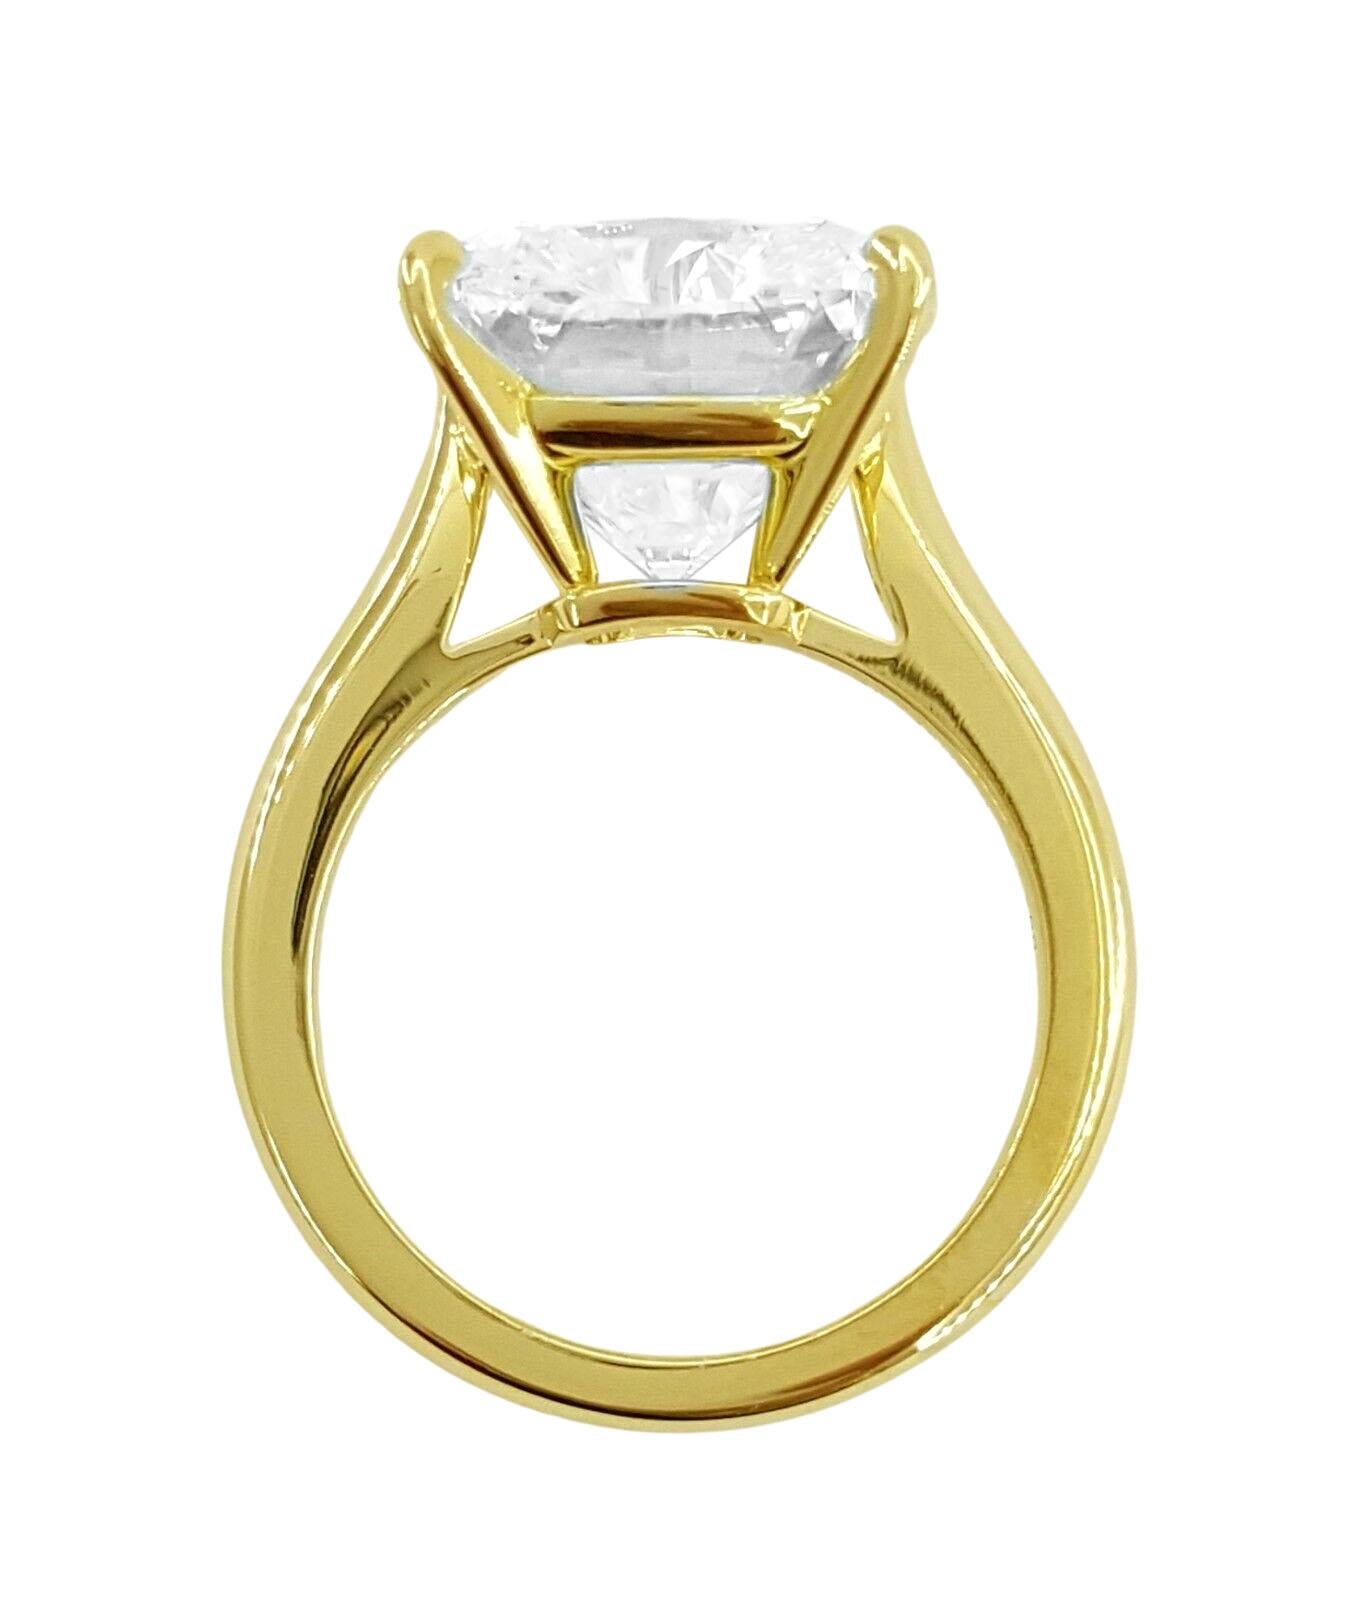 8kt diamond ring